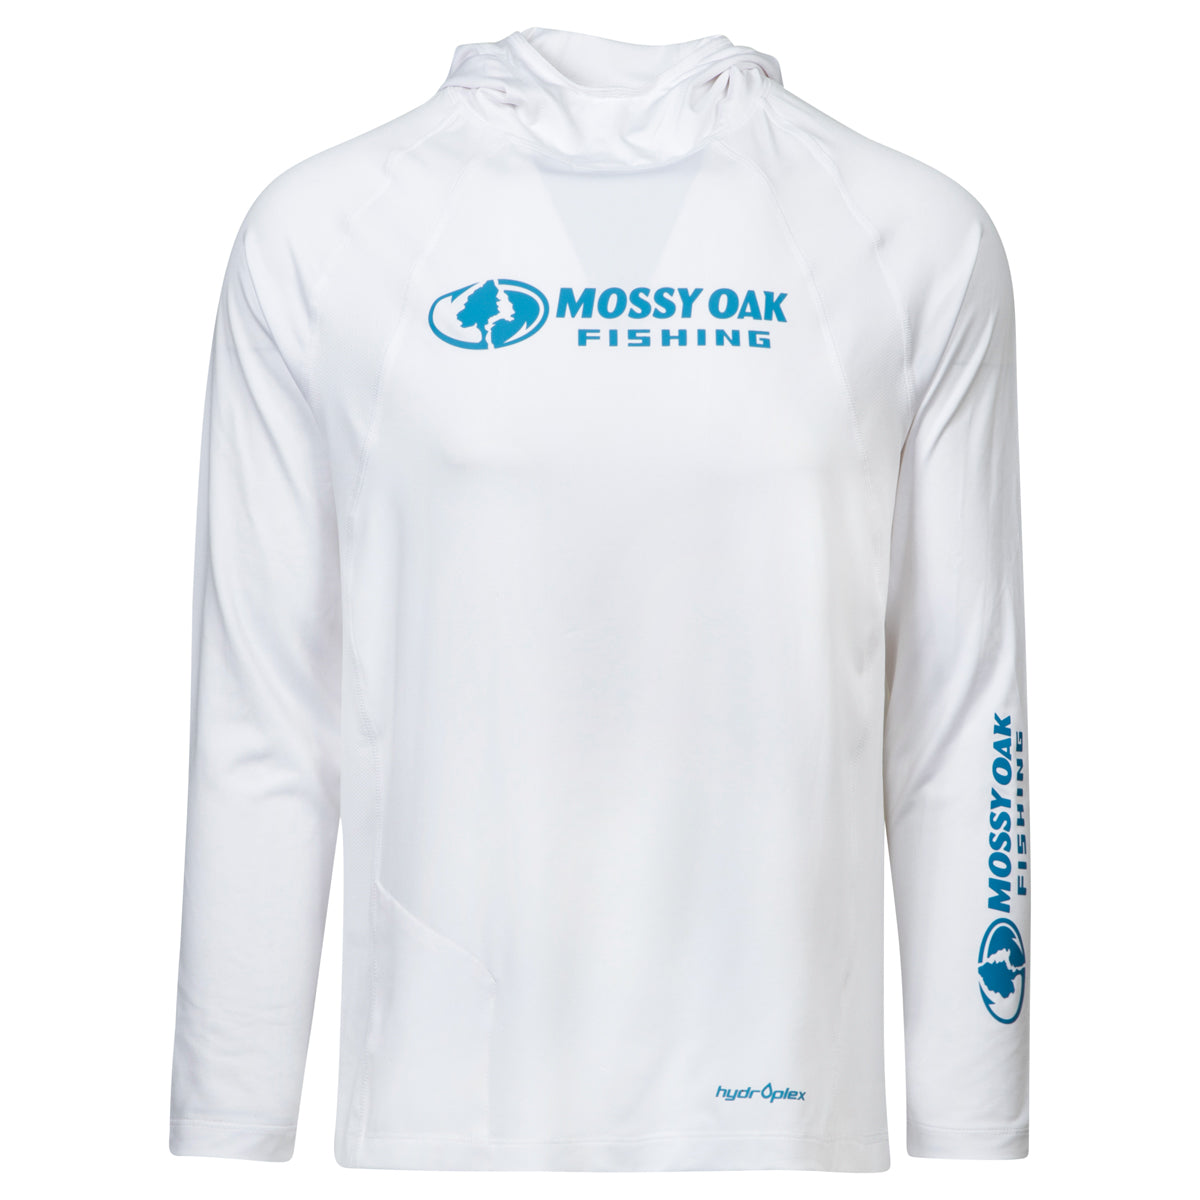 Mossy Oak Fishing Elements Logo Shirt